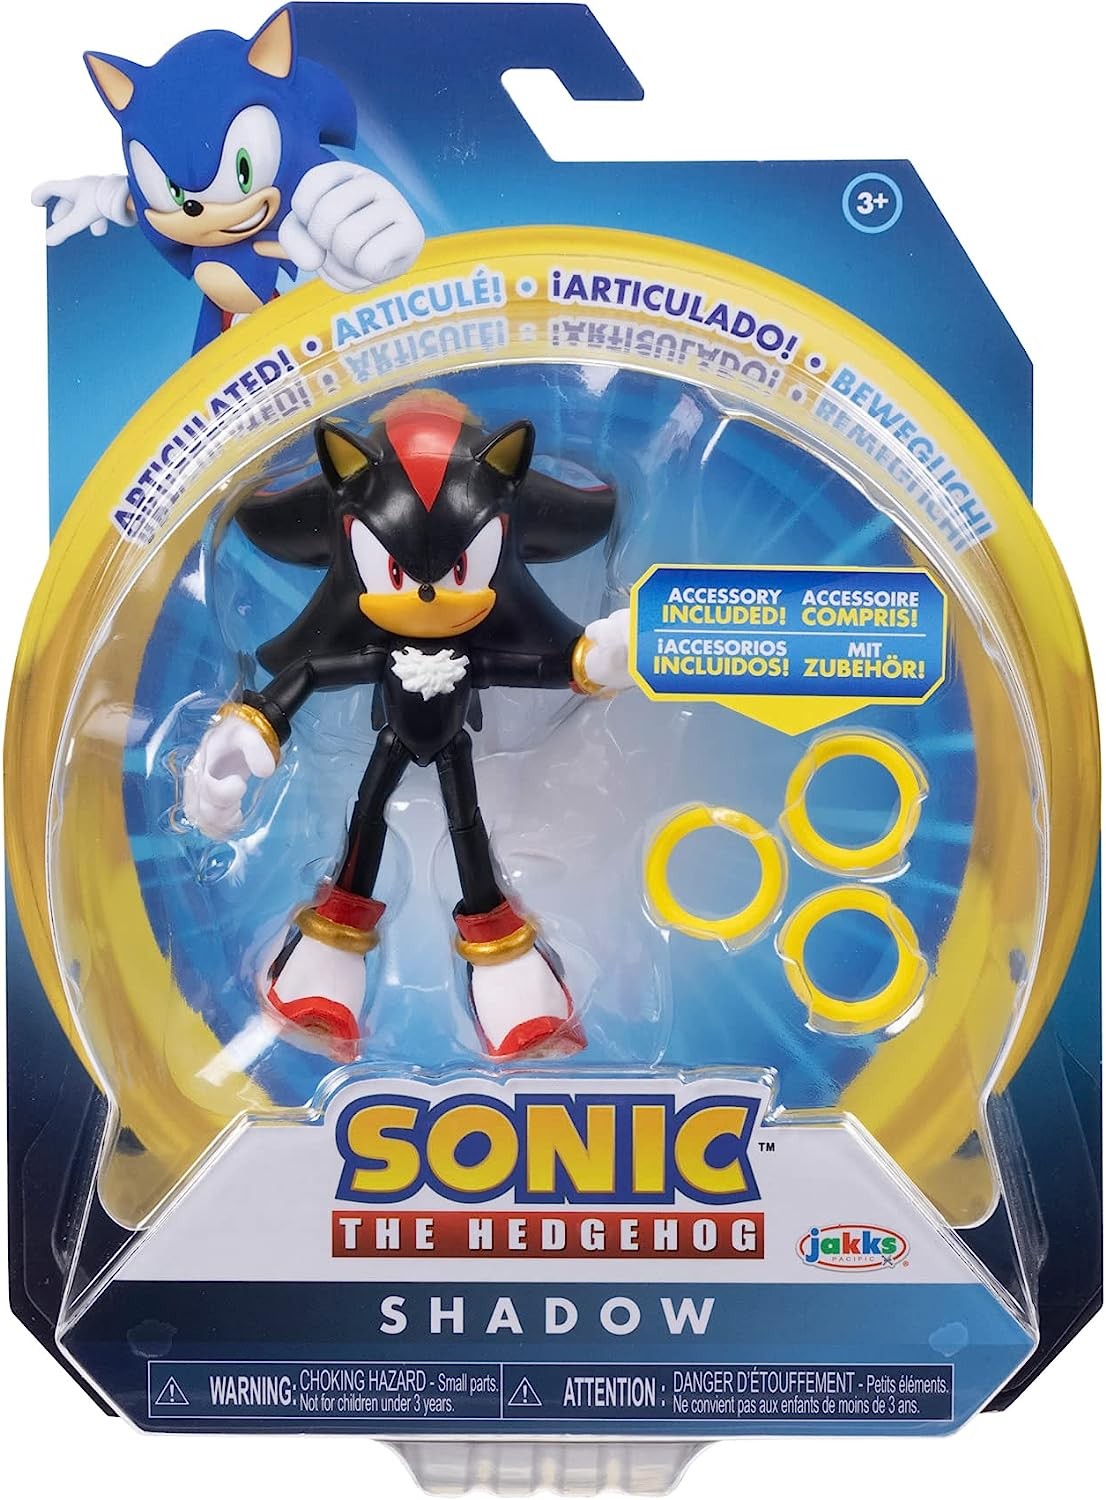 Sonic The Hedgehog Figurines 10cm